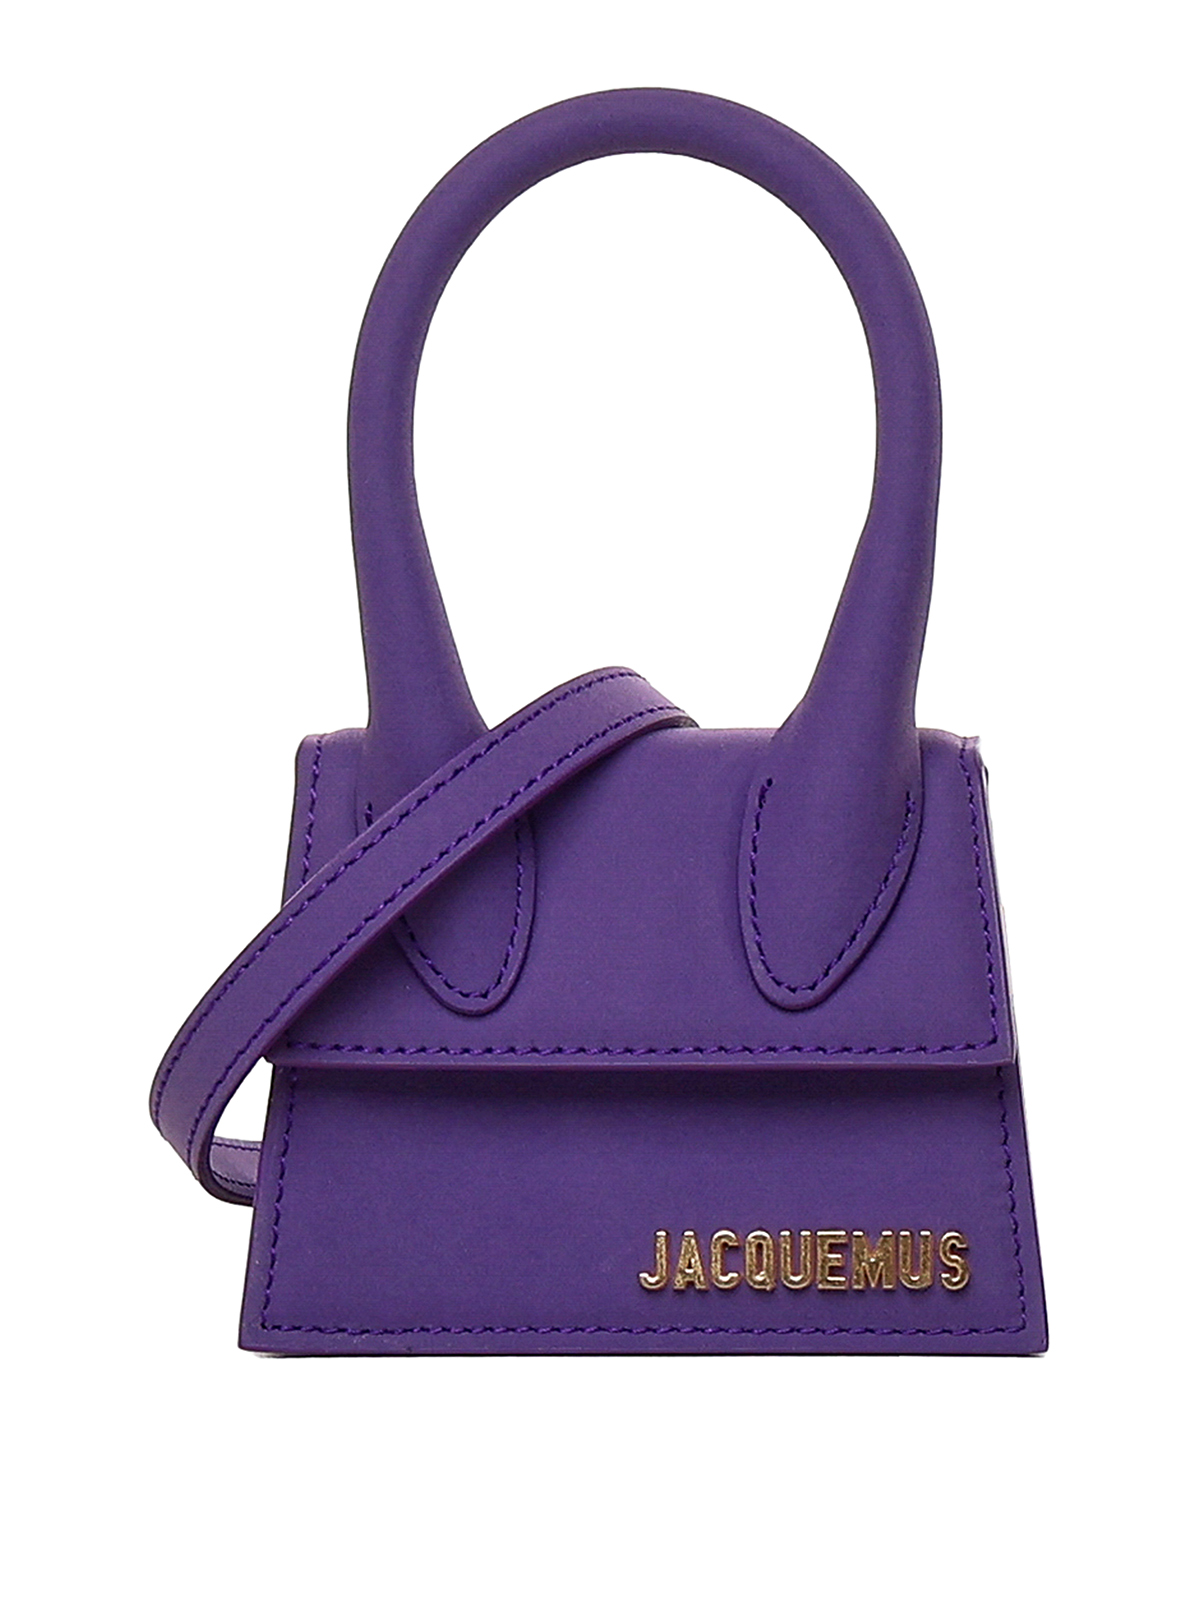 Totes bags Jacquemus - Le Chiquito tote - 213BA0013088650 | iKRIX.com